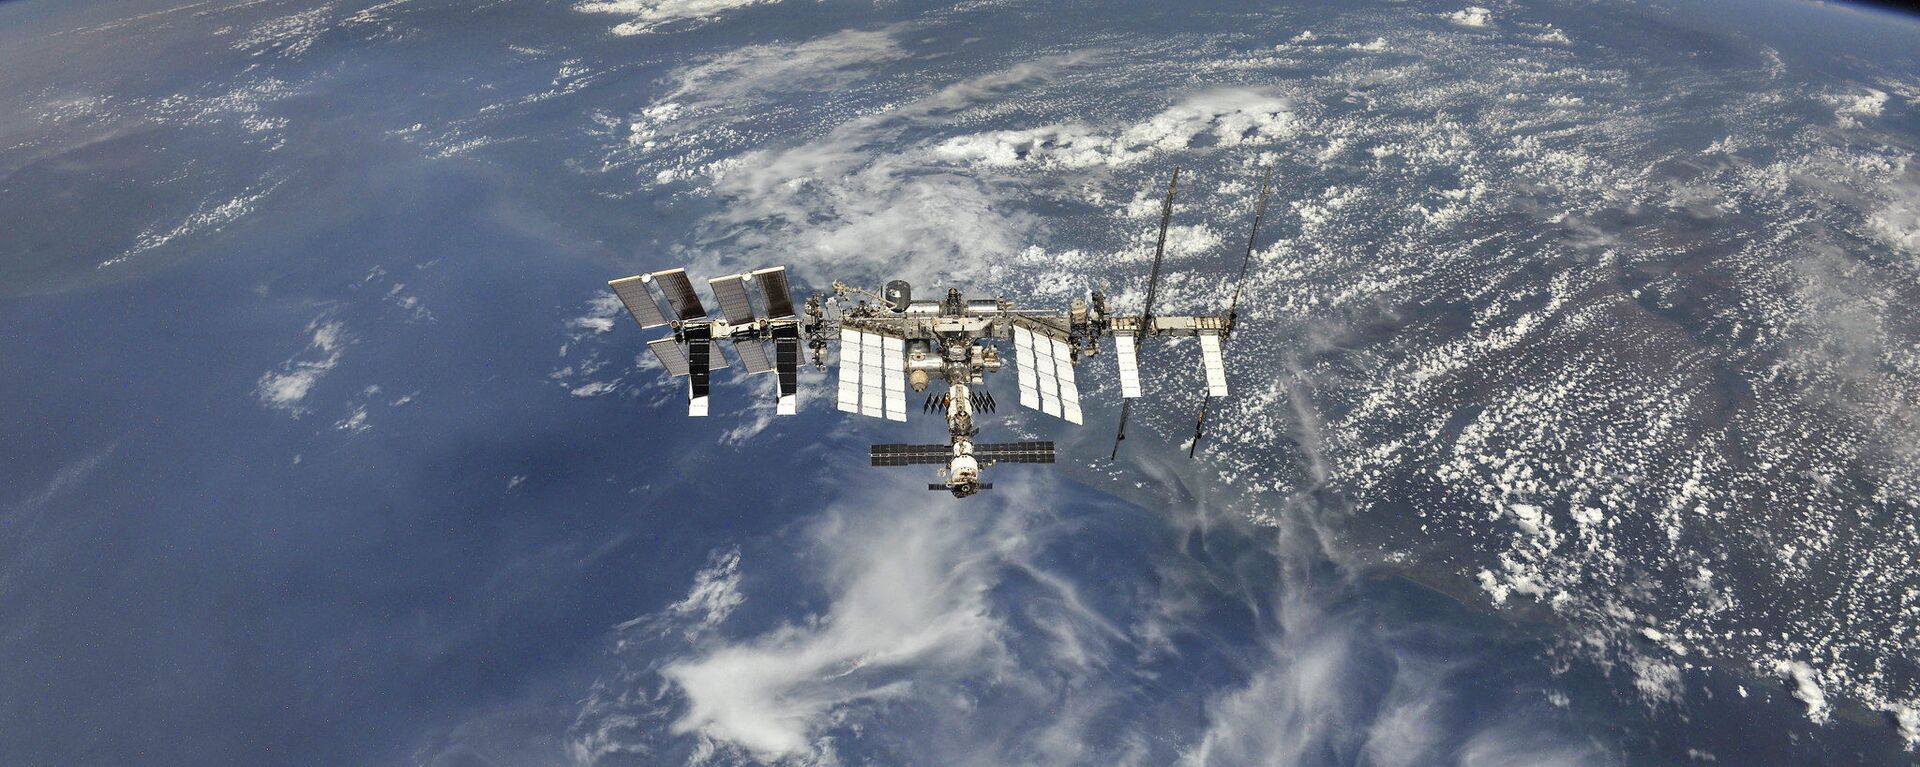 Estación Espacial Internacional (EEI) - Sputnik Mundo, 1920, 24.02.2021